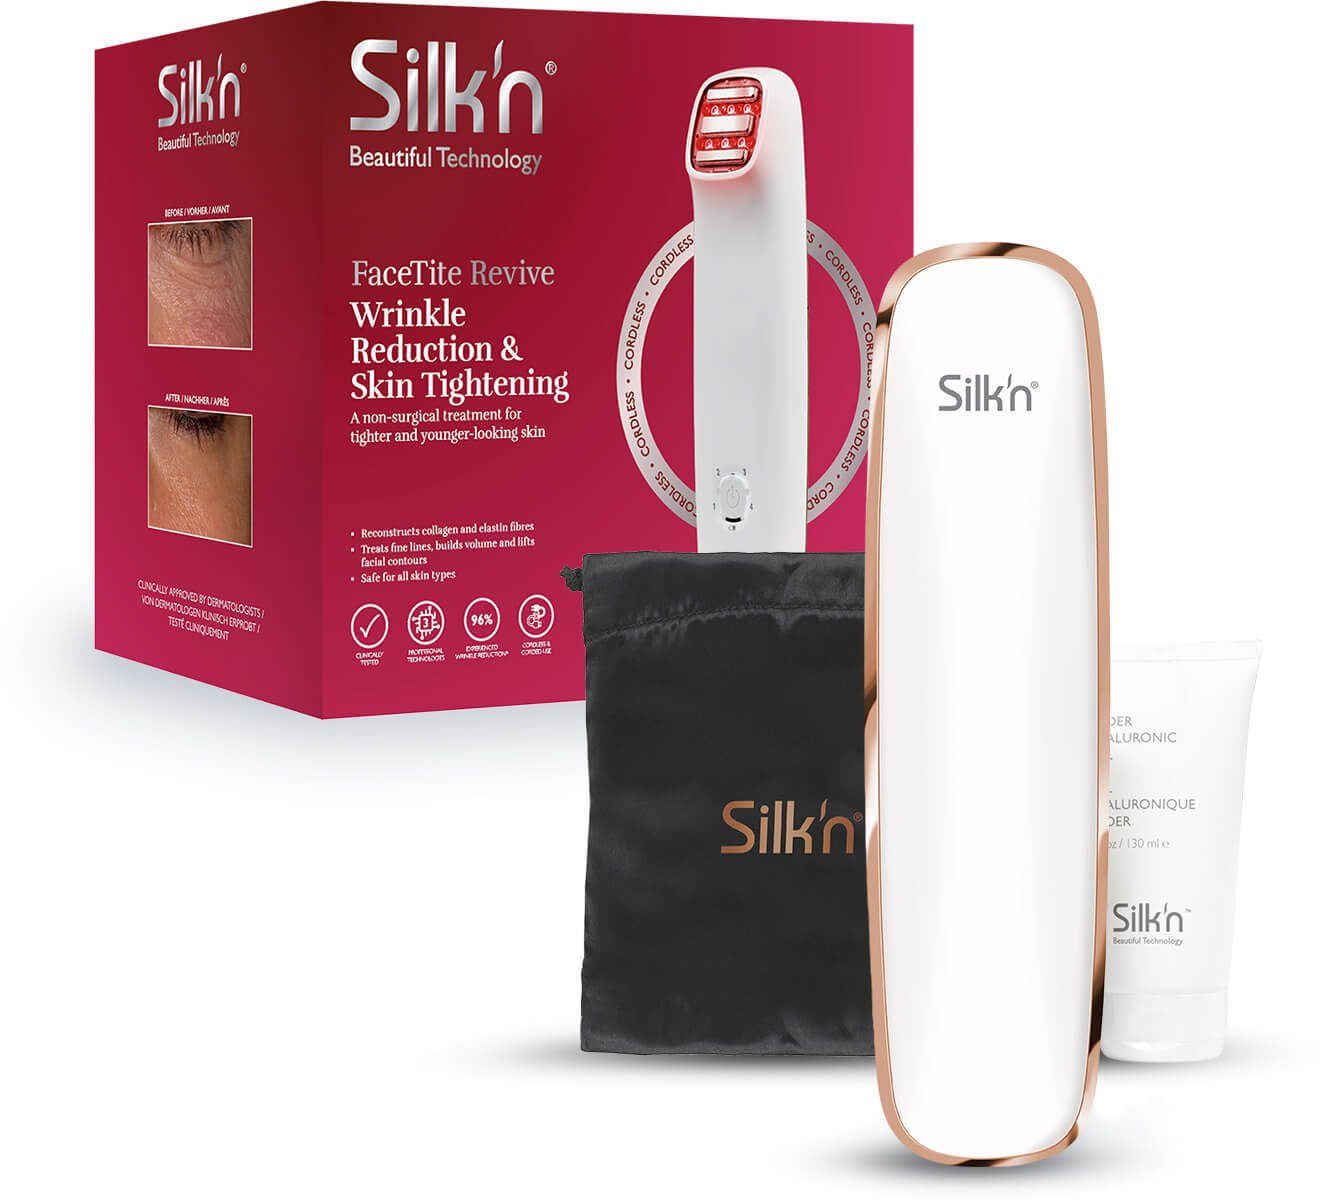 Silk'n Anti-Aging-Gerät Revive FaceTite